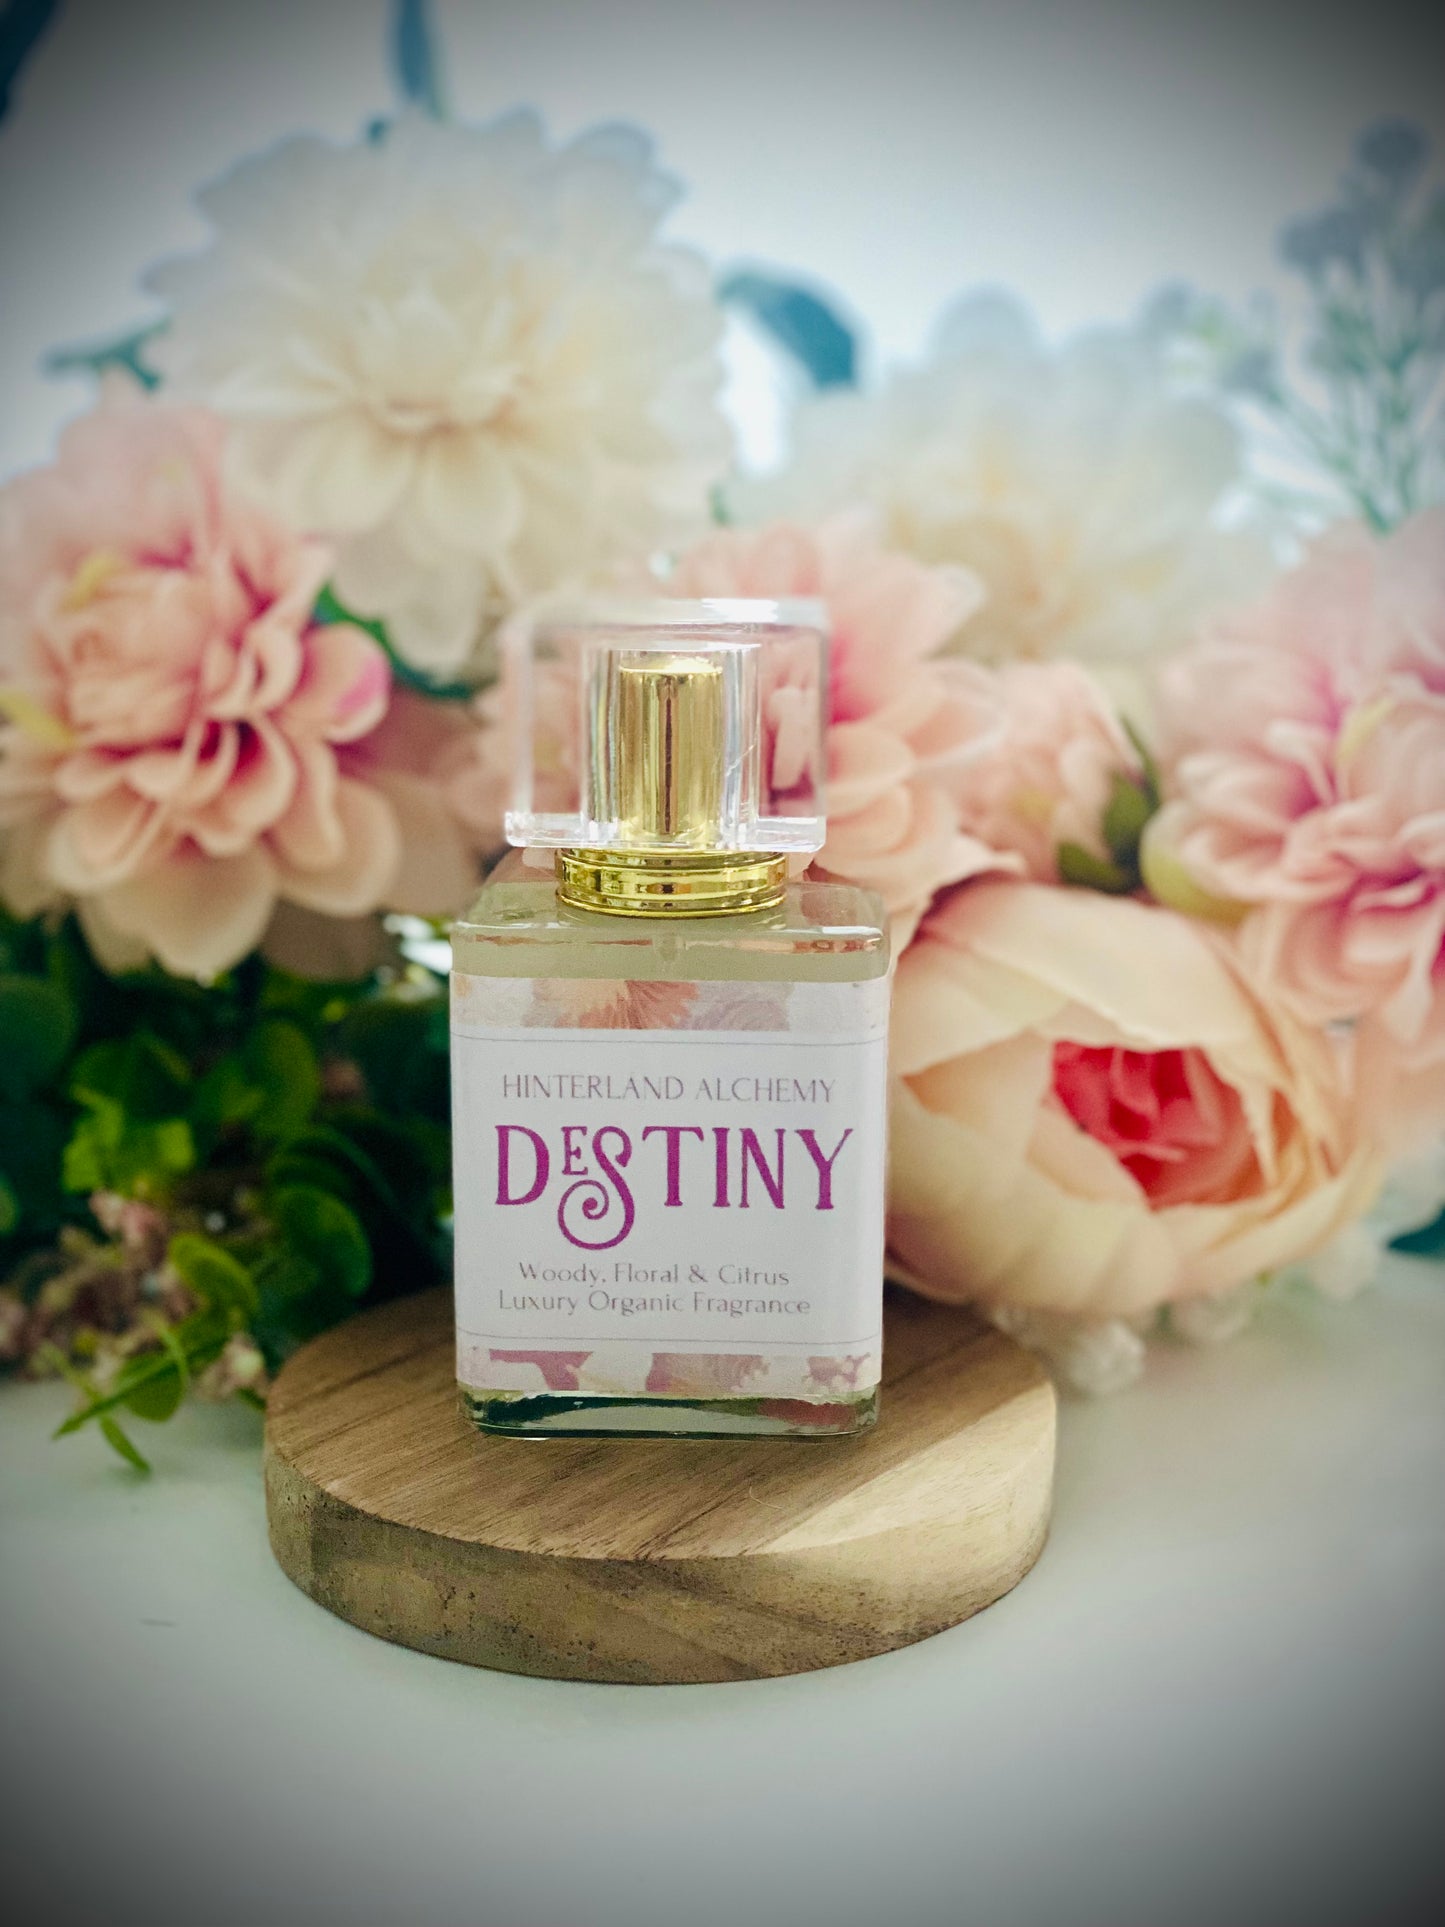 Goddess Fragrance - Destiny.